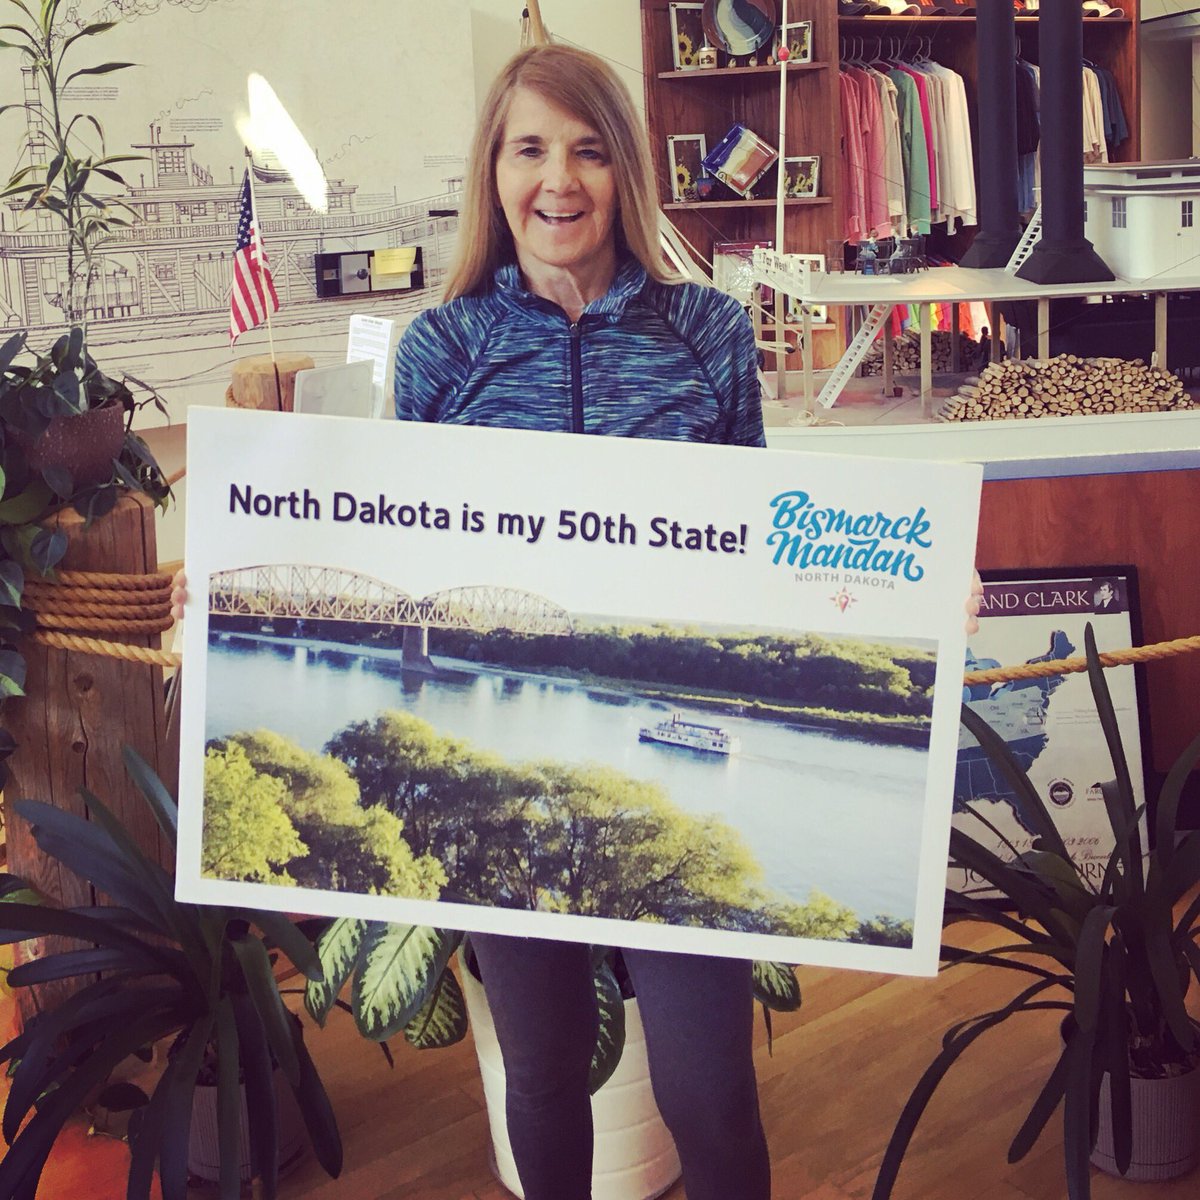 Carol from Los Angeles, CA made #northdakota her #50thstate and we were here to help celebrate her accomplishment! Way to go, Carol! 🎉 #noboundariesnd  #ilovebisman